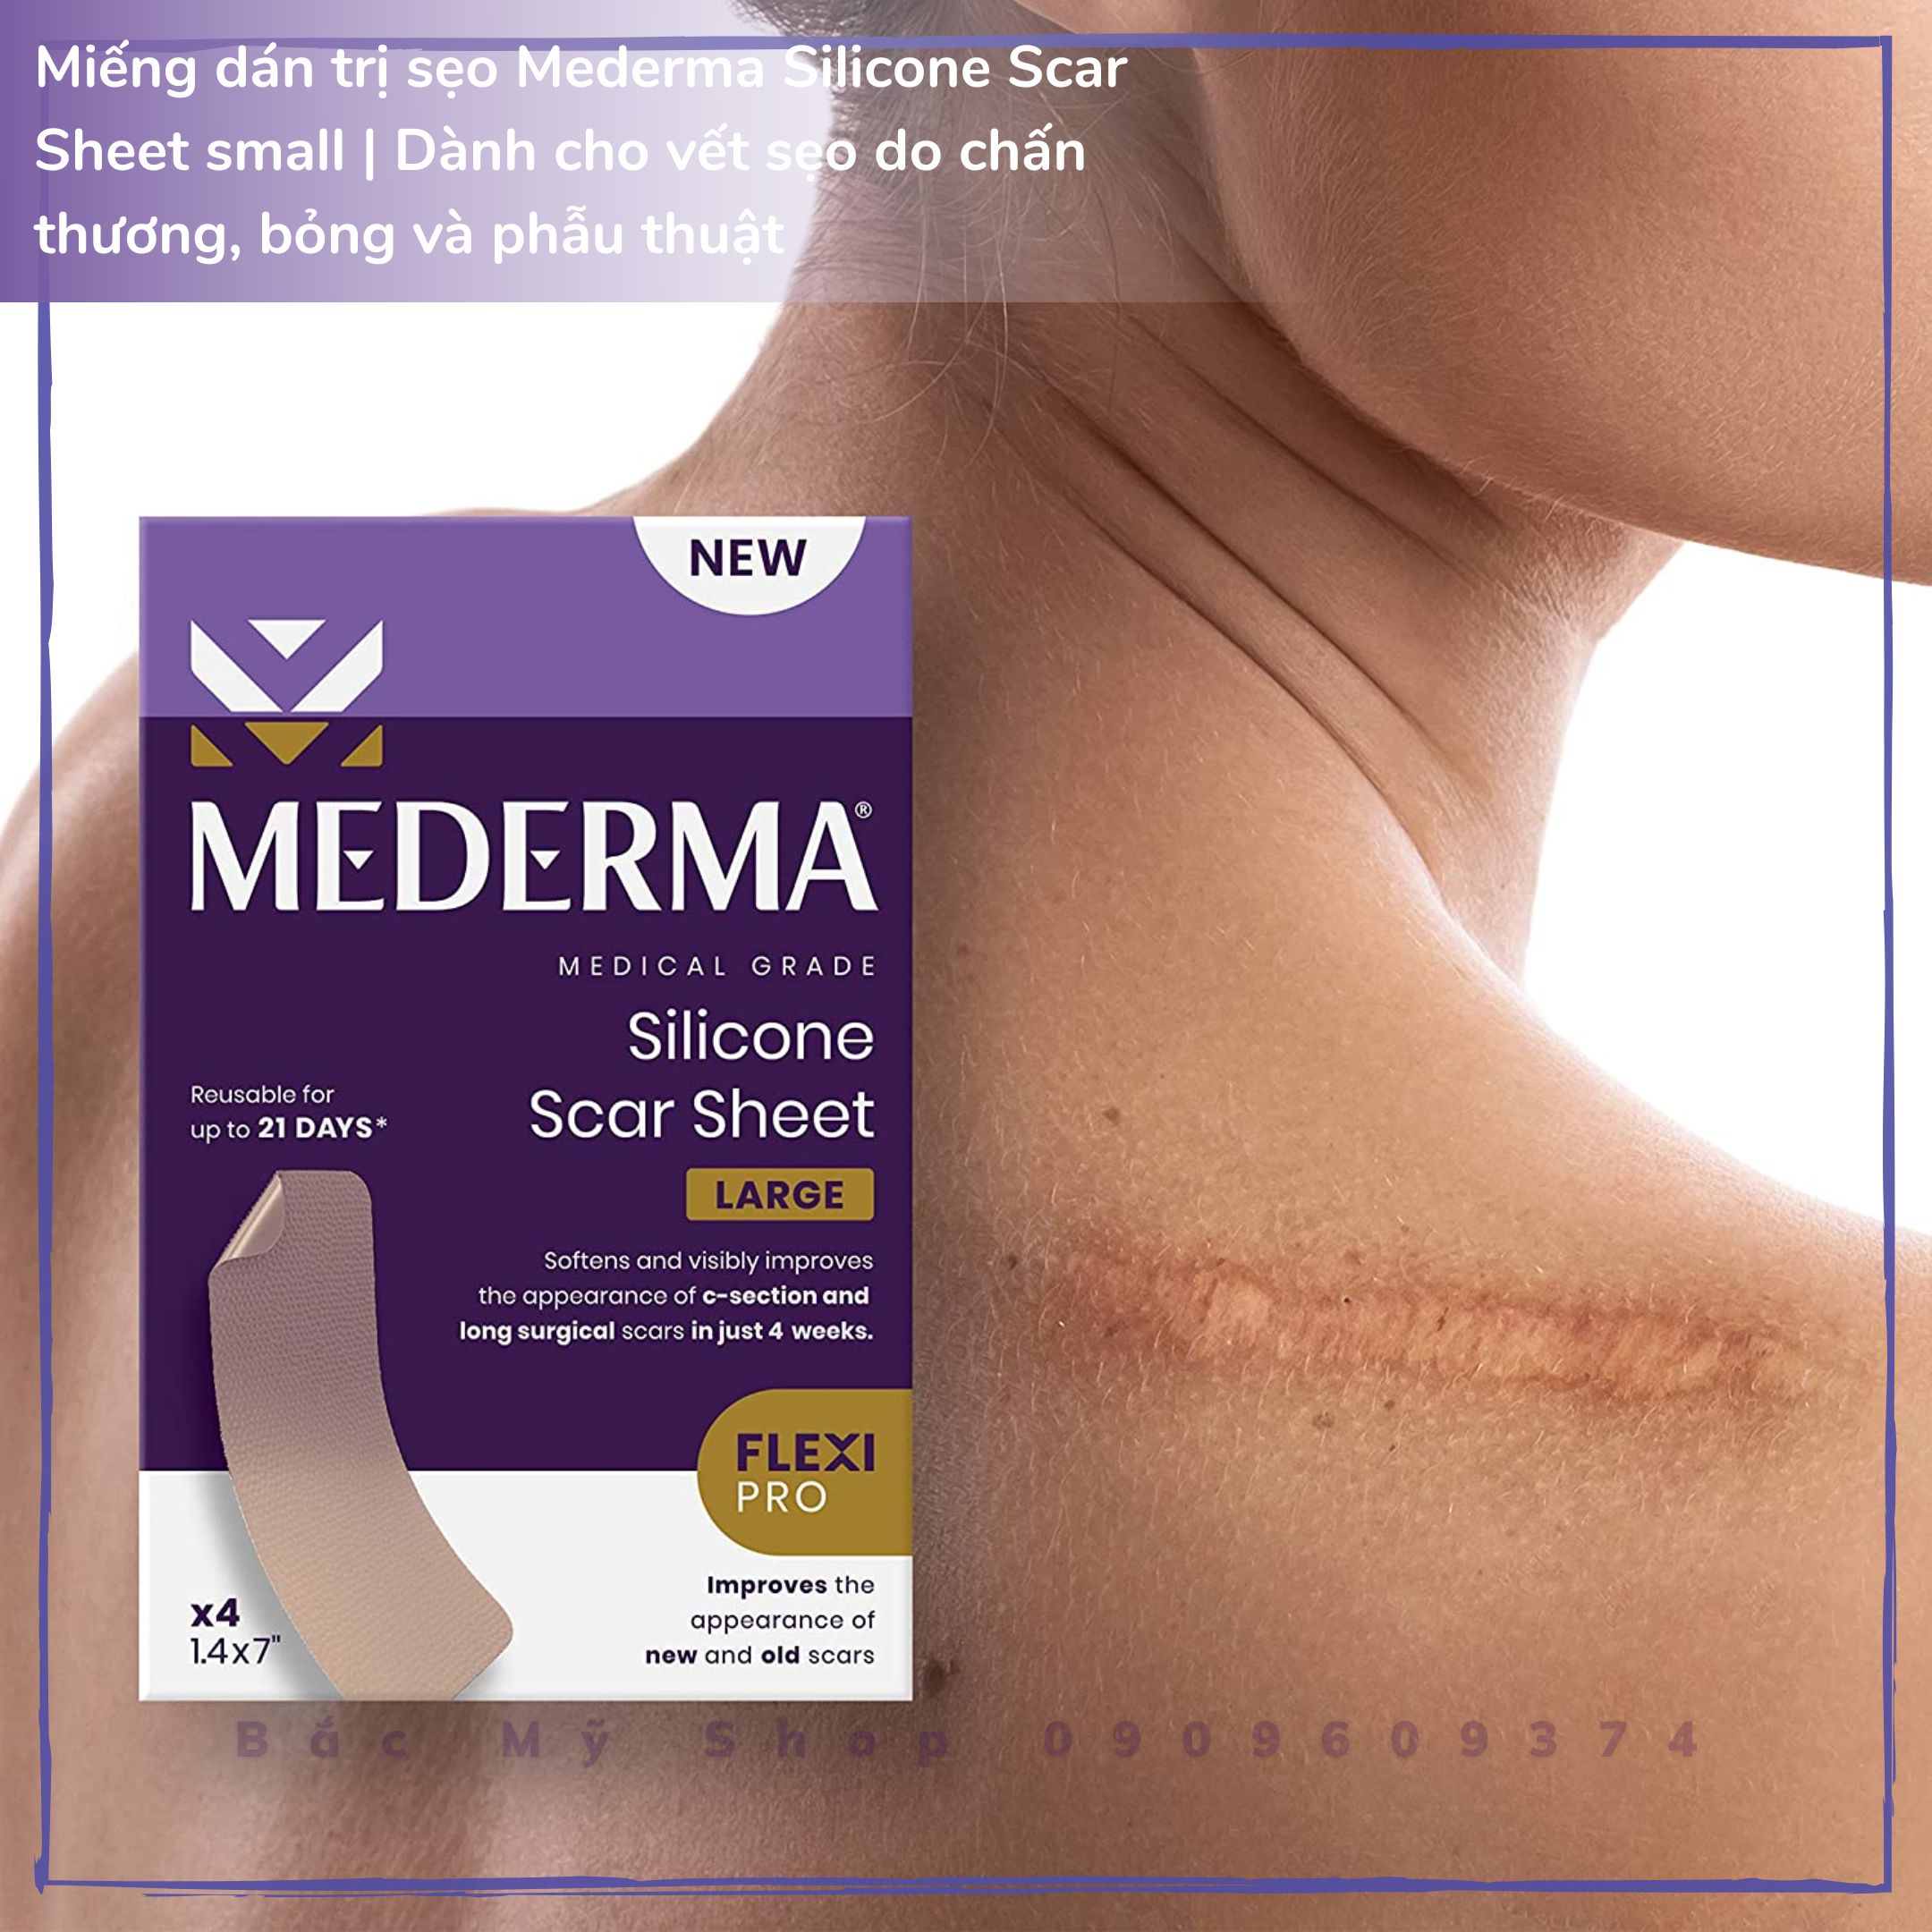 Miếng dán mờ sẹo Mederma Medical Grade Silicone Small Scar Sheet Dành cho